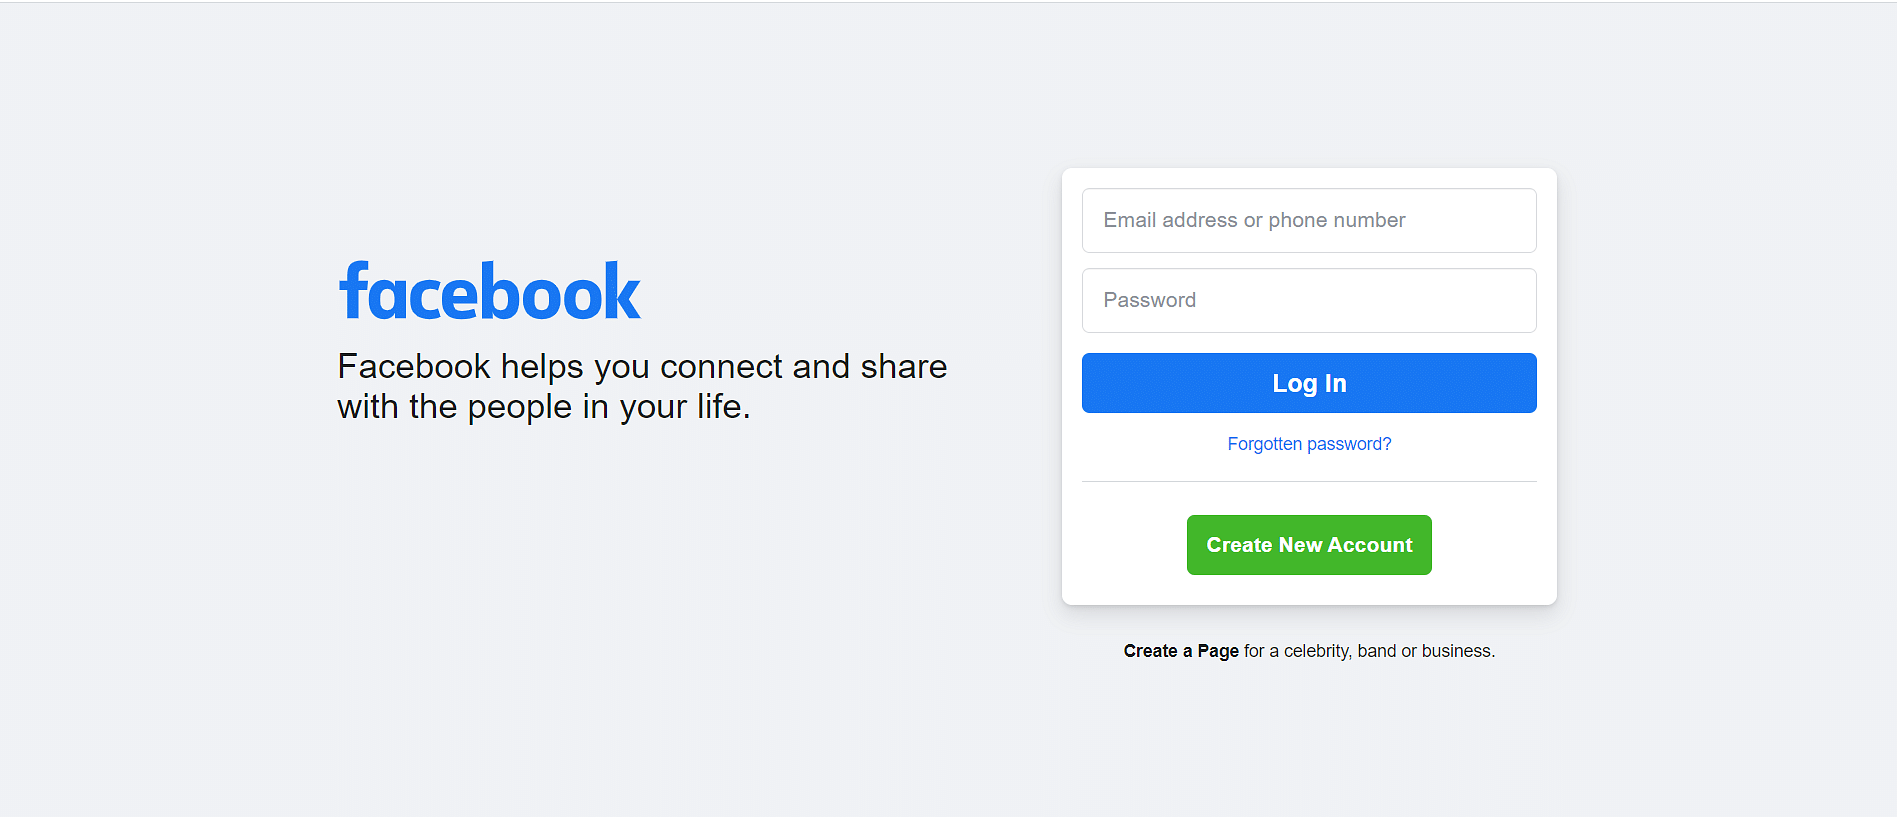 Facebook password-bypass flaw fixed - CNET